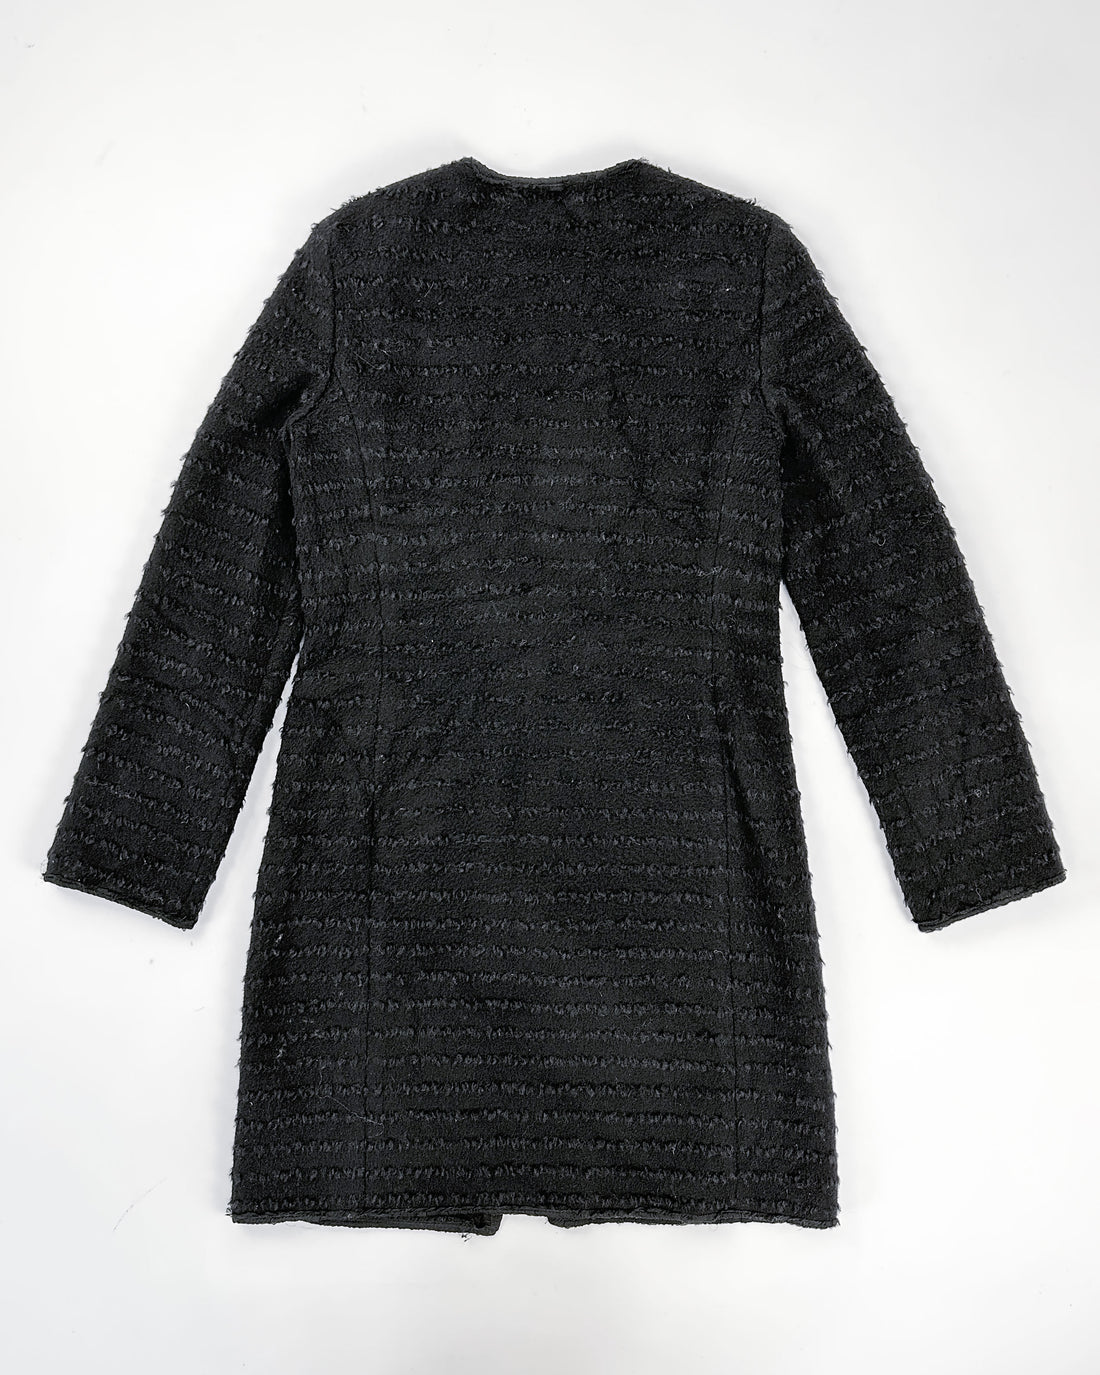 Dolce & Gabbana Black Texture Long Coat 2000's